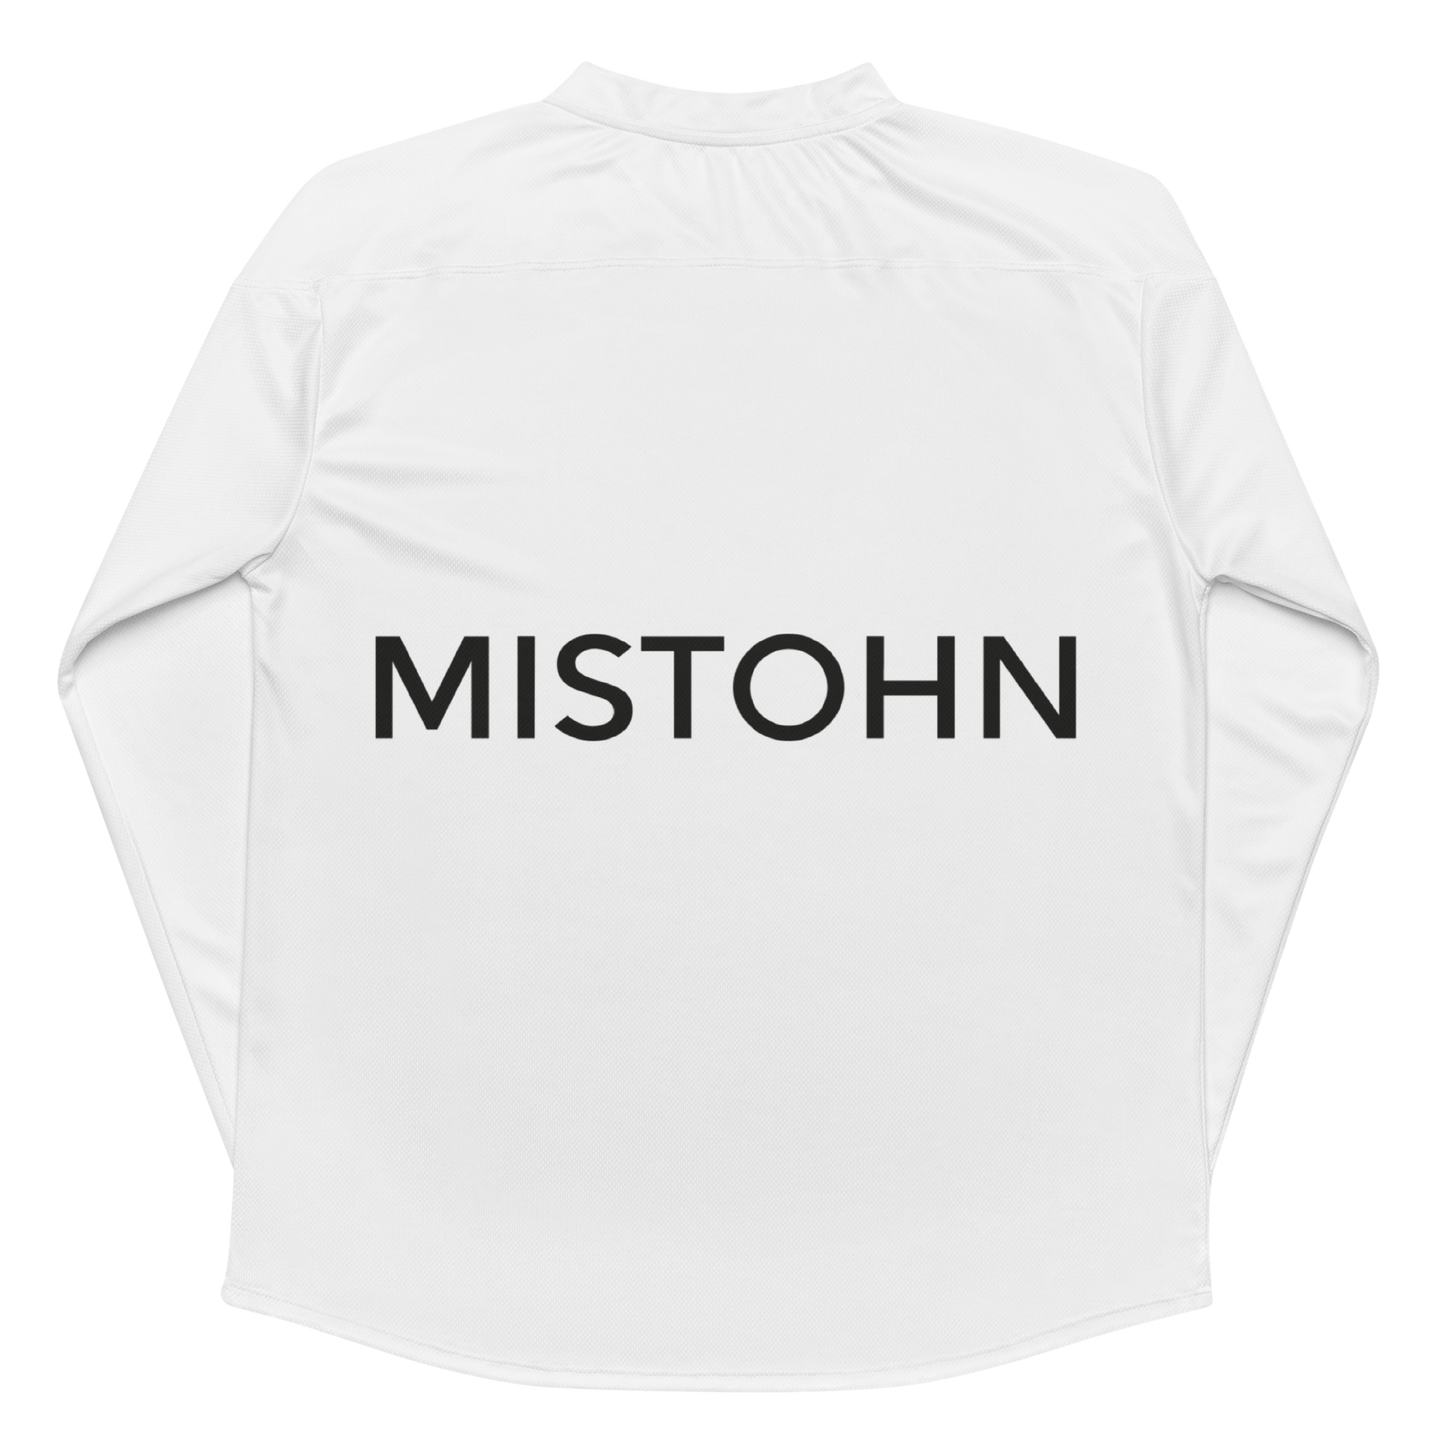 Original Mistohn Ltd Recycled Jersey